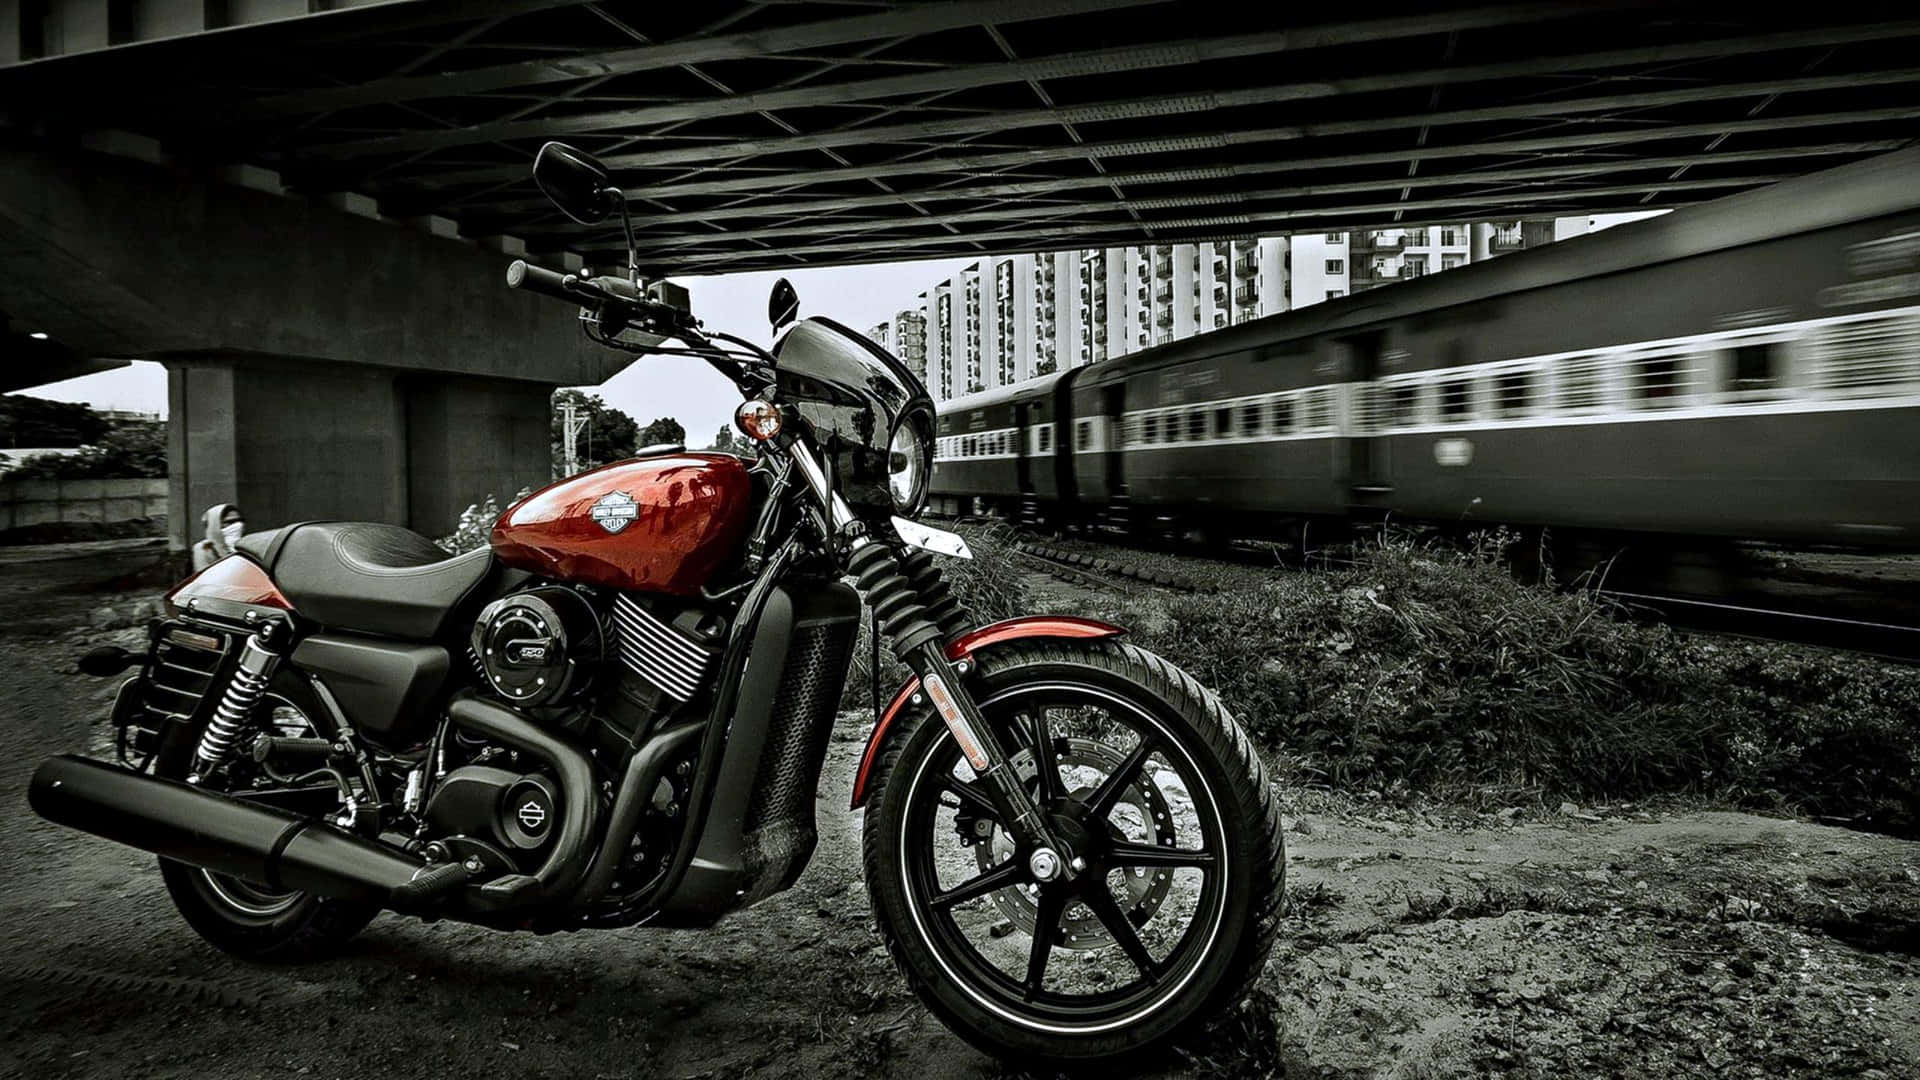 Harley Davidson Motor In Black Background